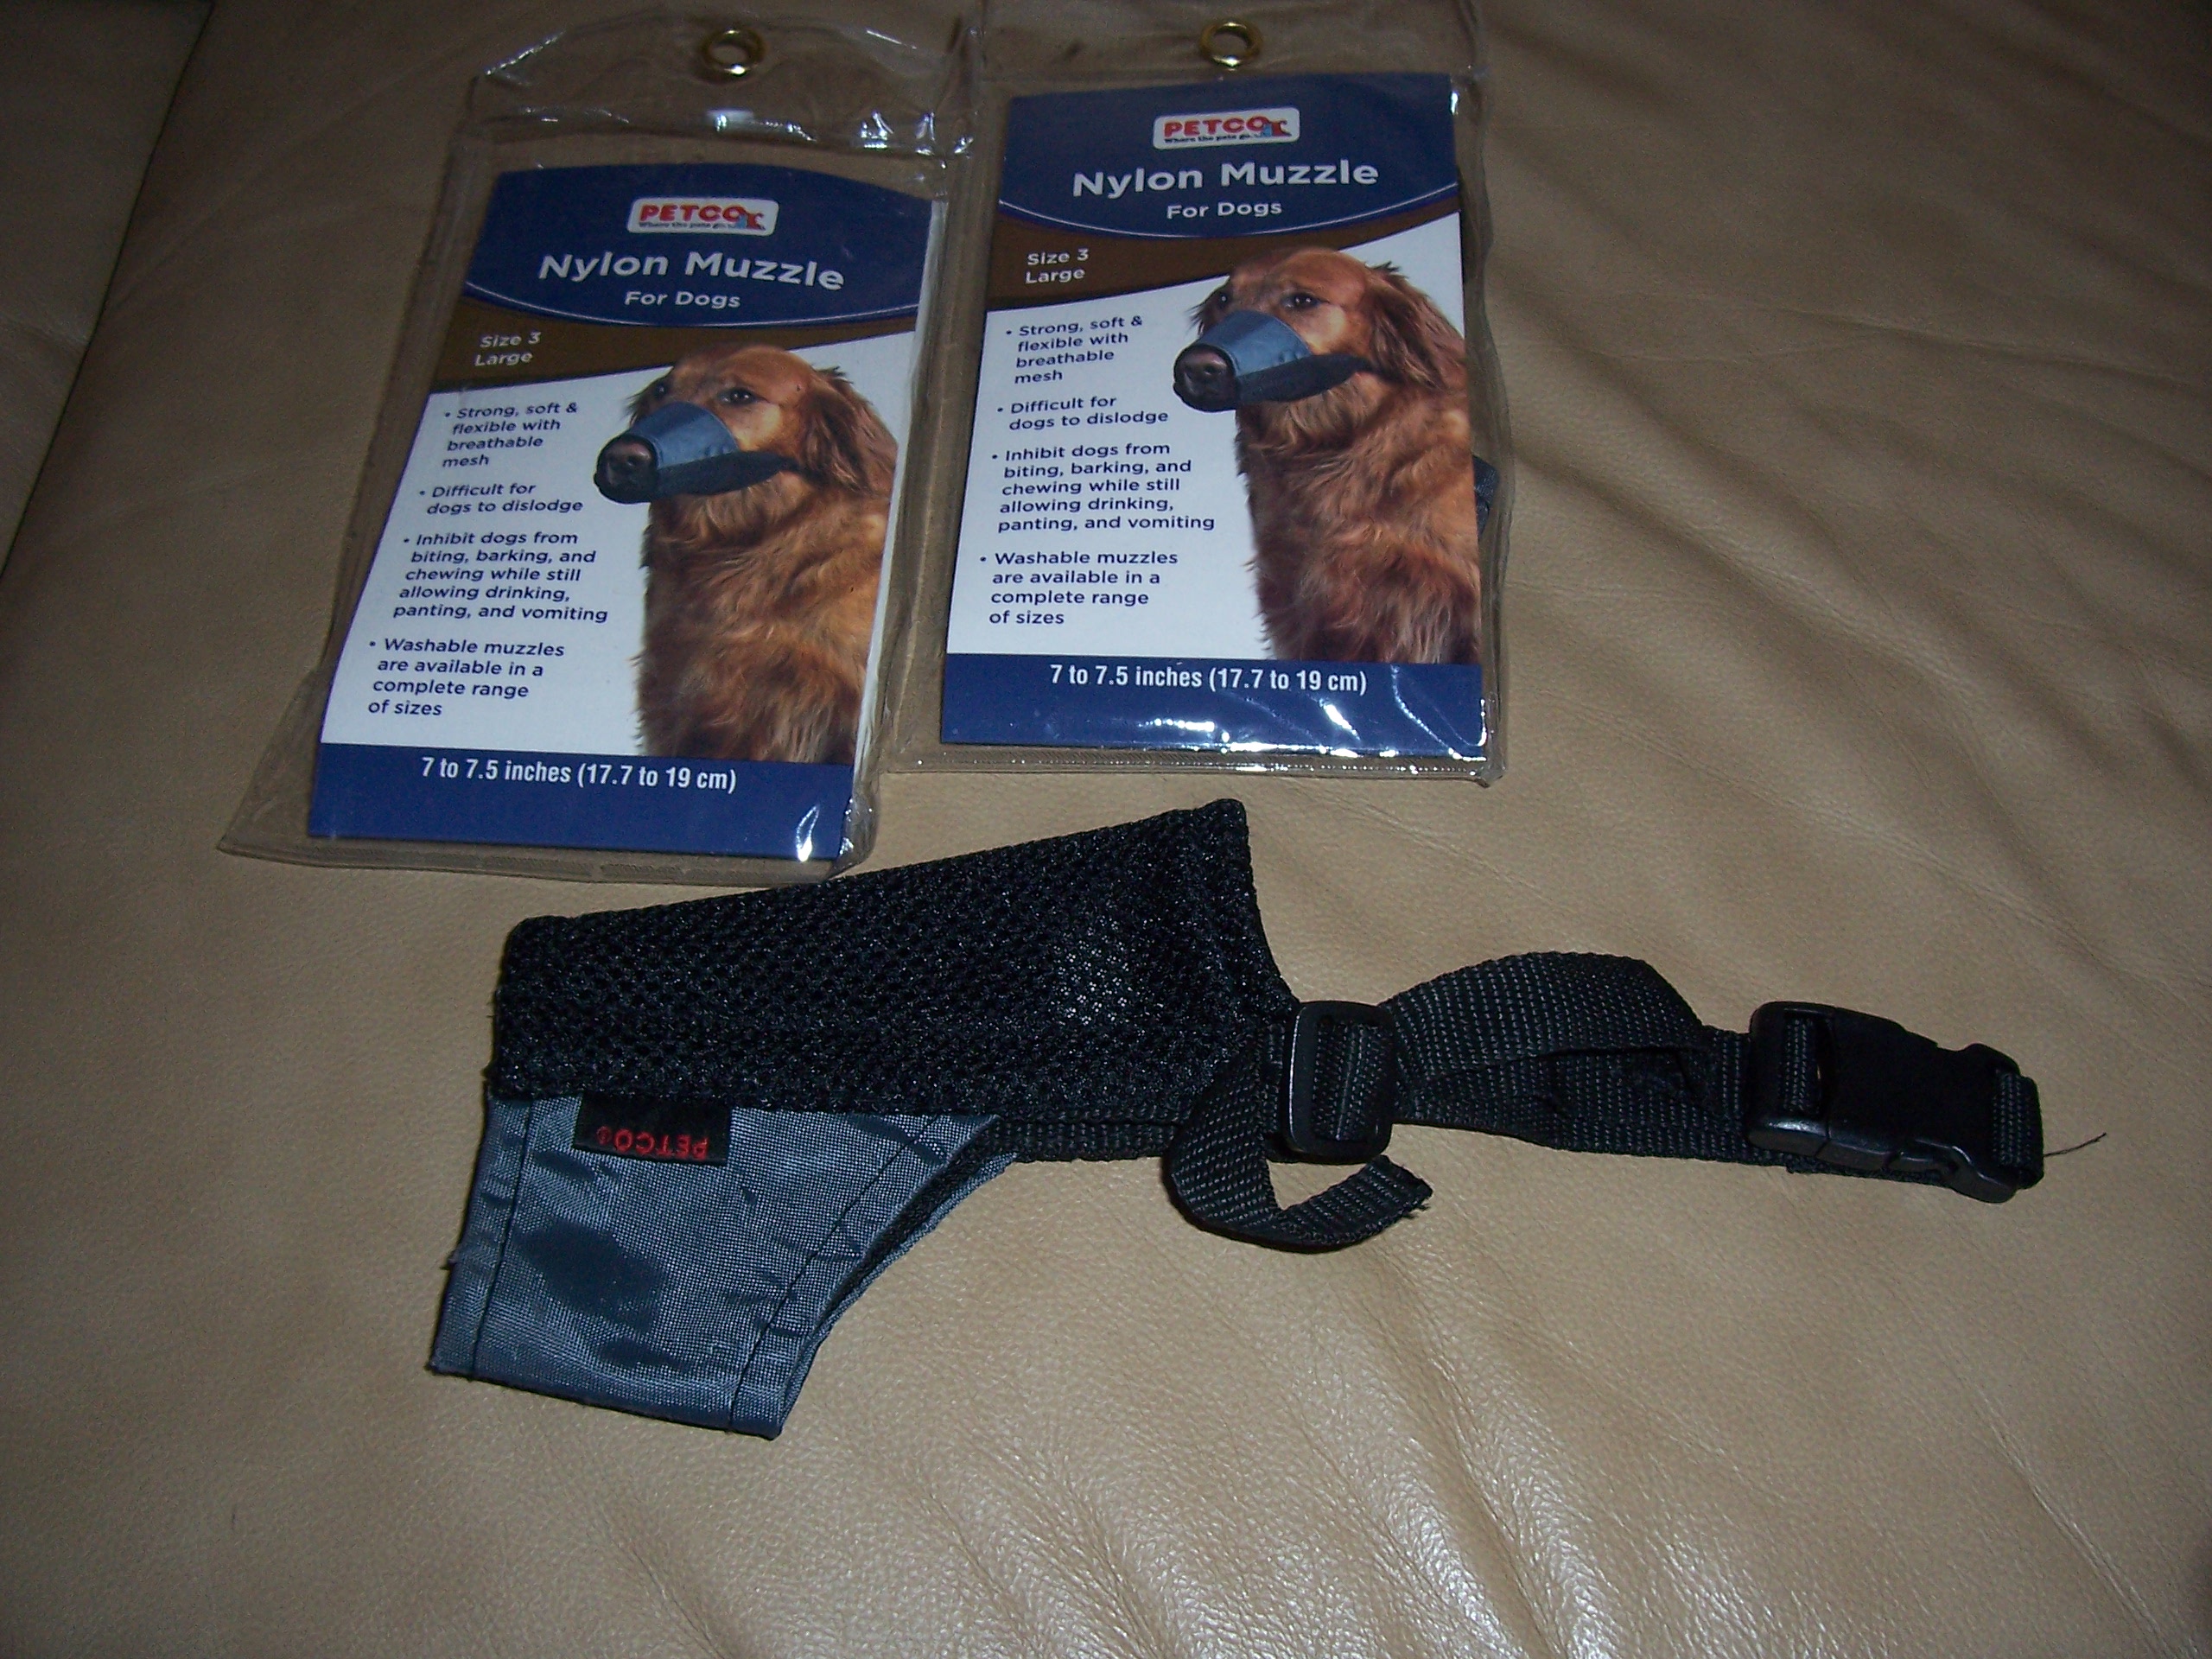 Nylon muzzle for dogs